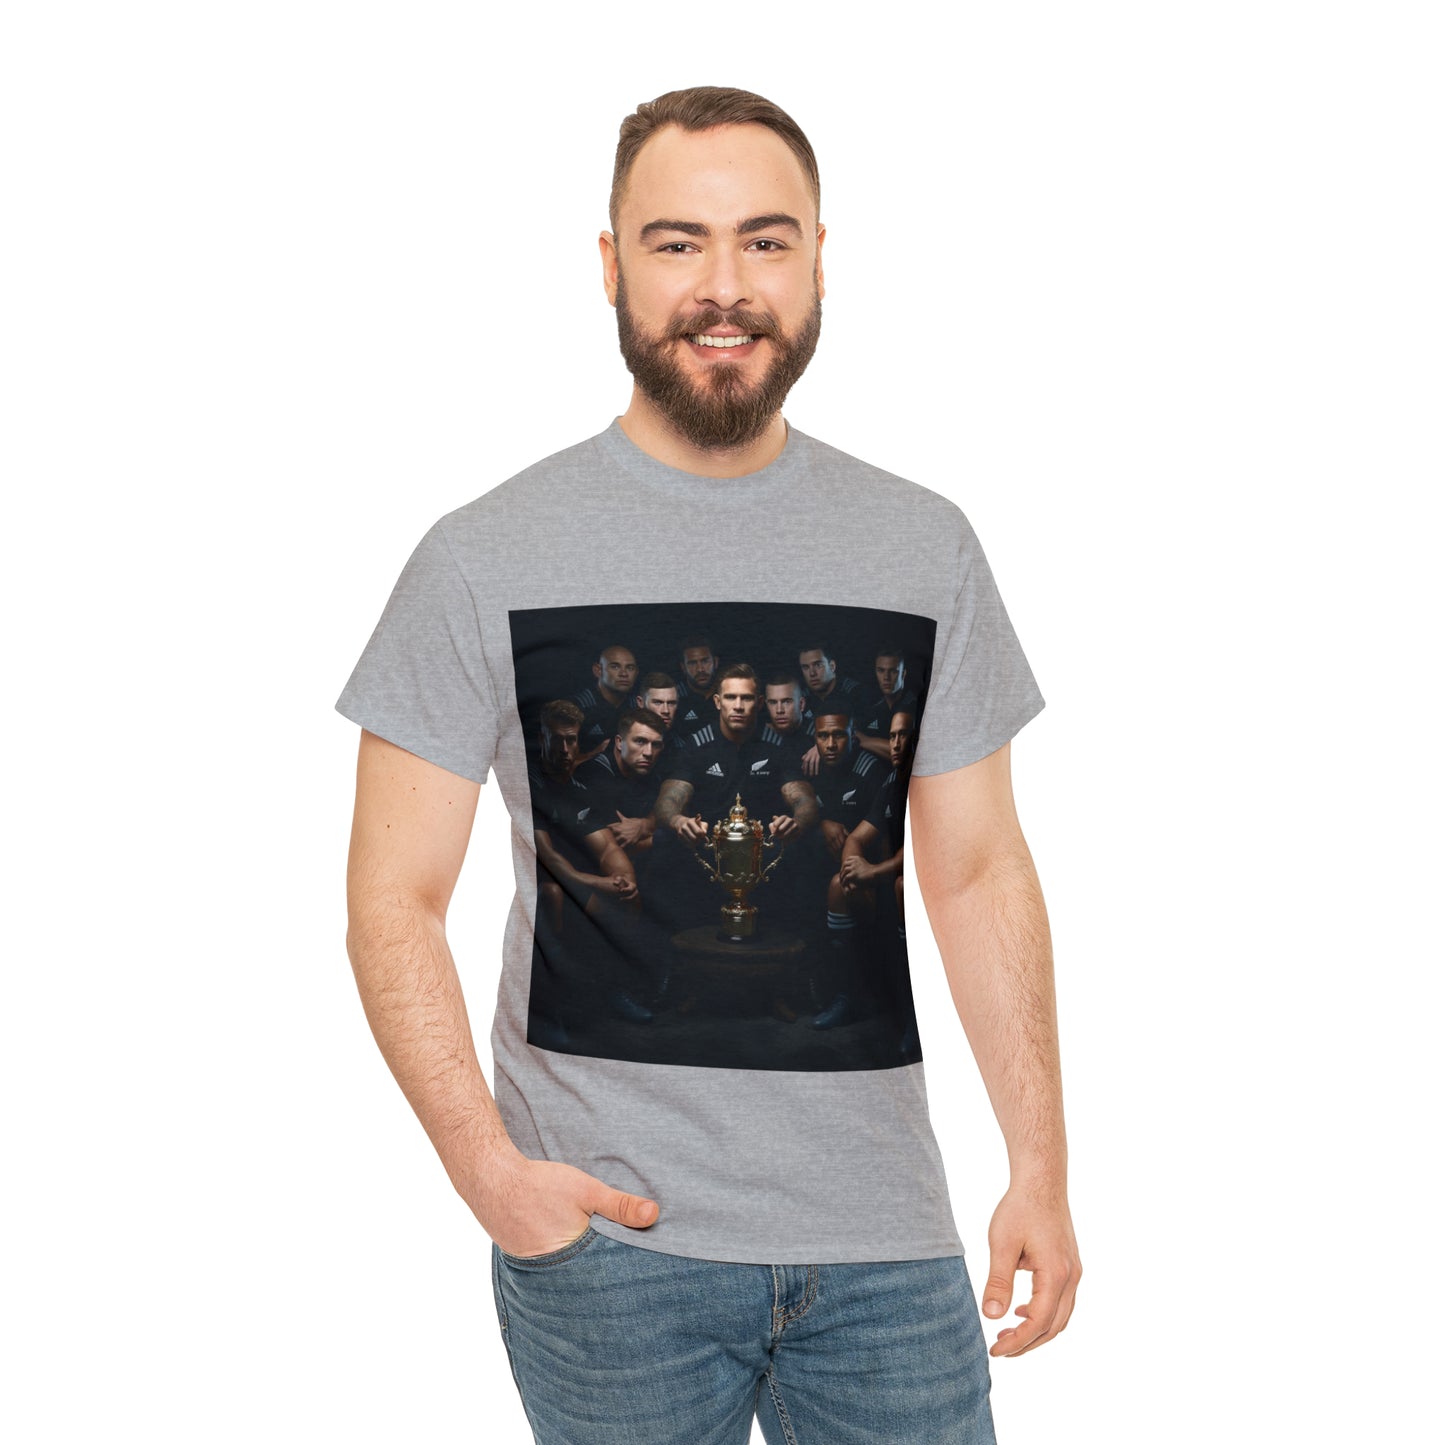 All Blacks Winners Photoshoot - light shirts